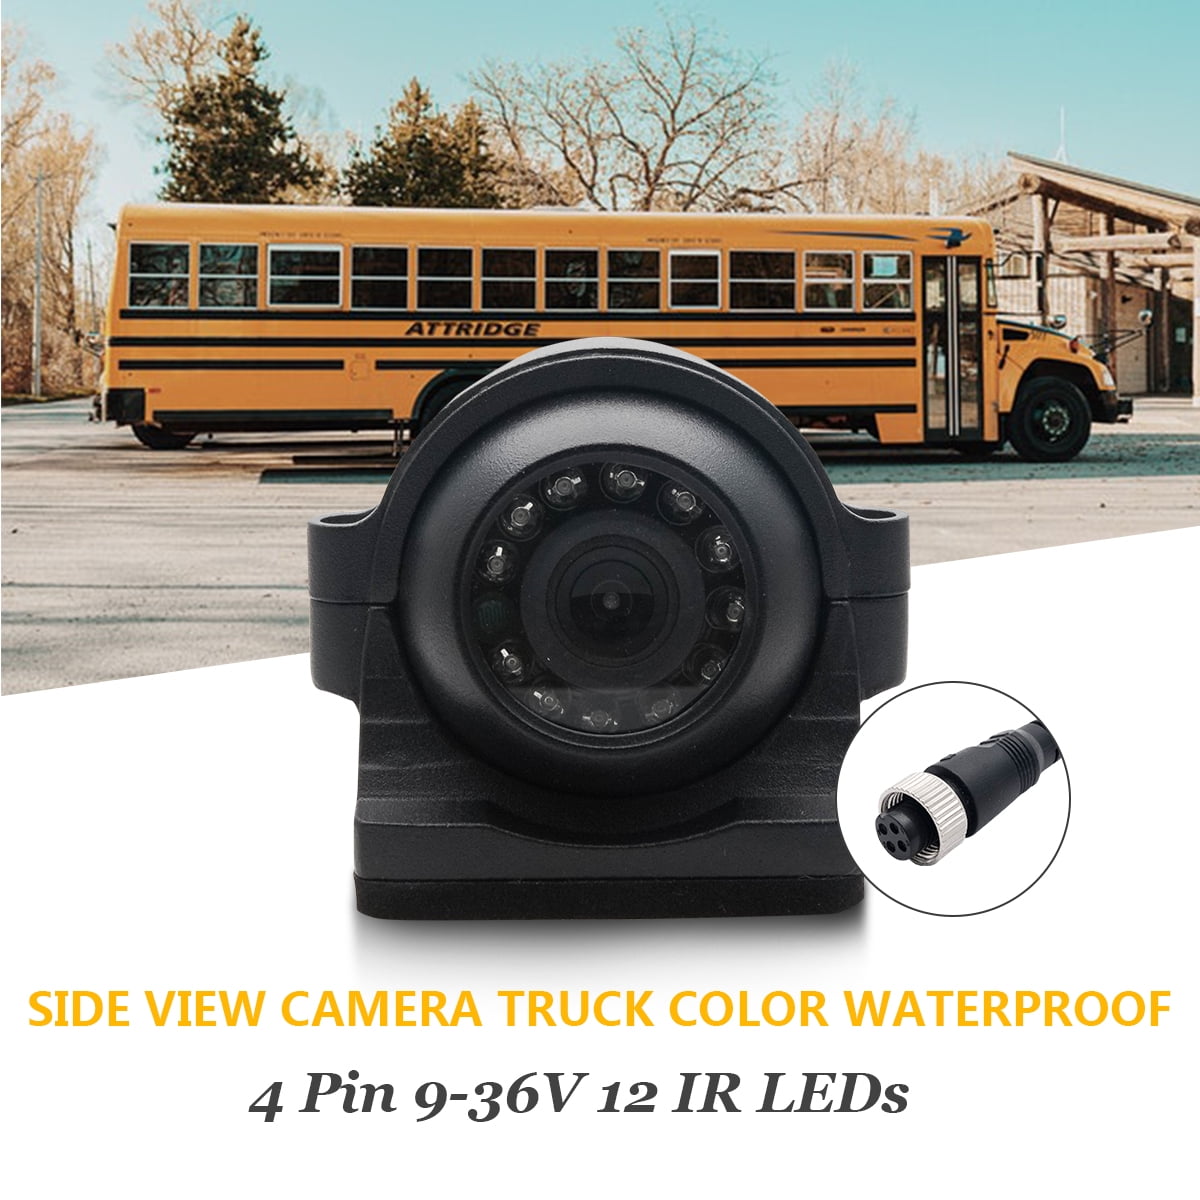 Heavy Duty 4 Pin 12 IR LED Night Vision Car Van Bus Side View CCD HD Camera Kit 